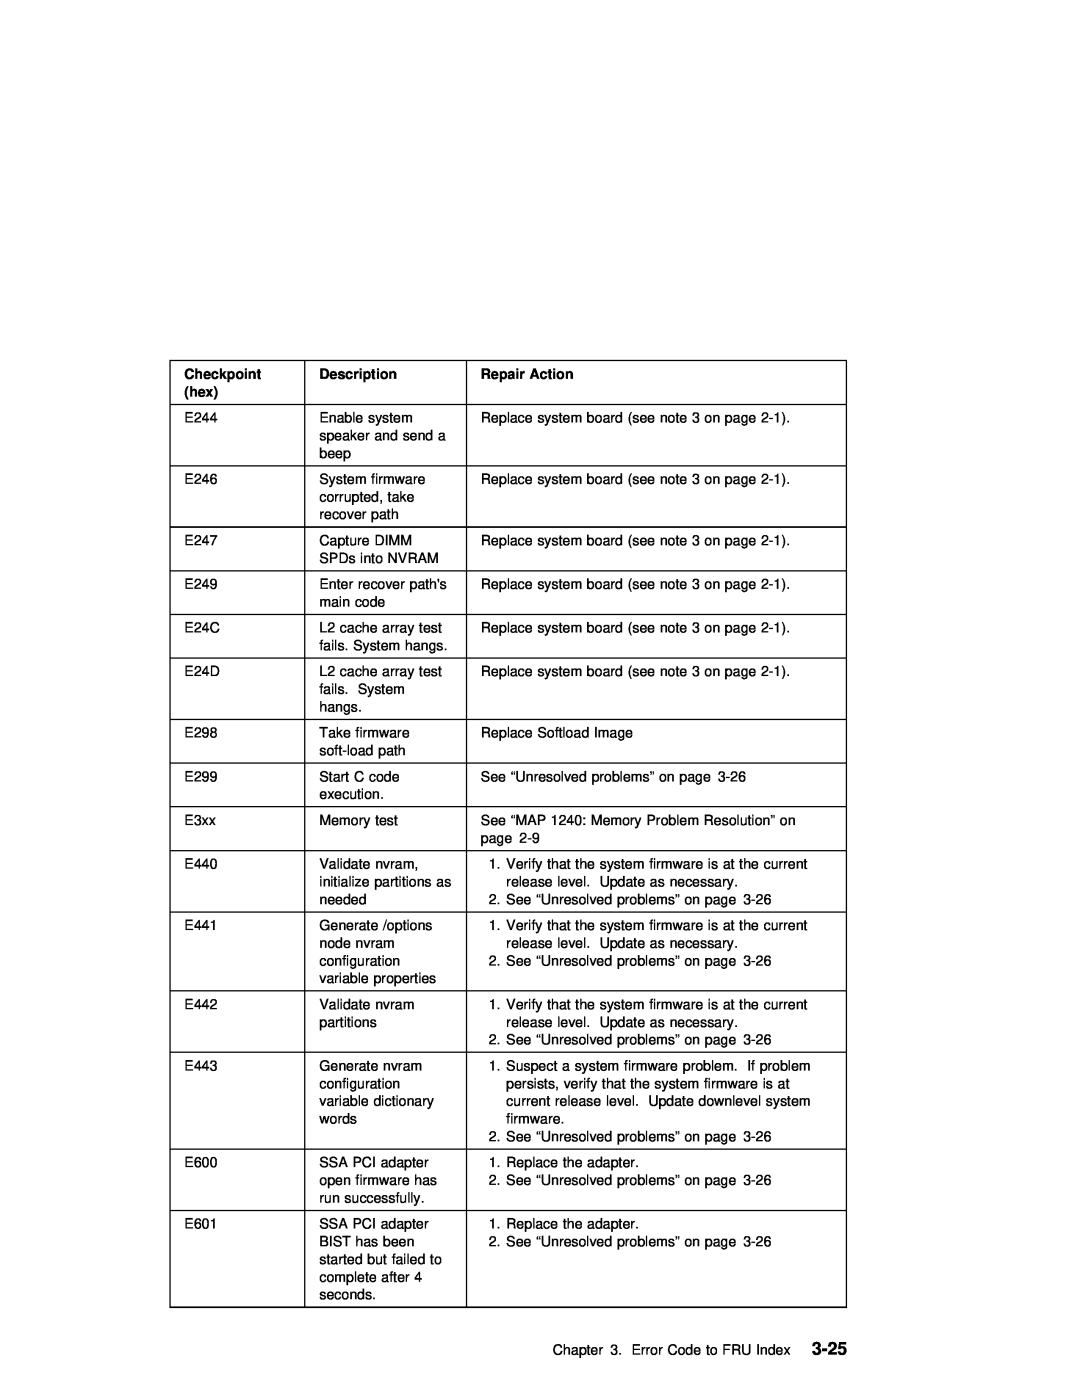 IBM B50 manual 3-25, Checkpoint, Description, Repair Action 